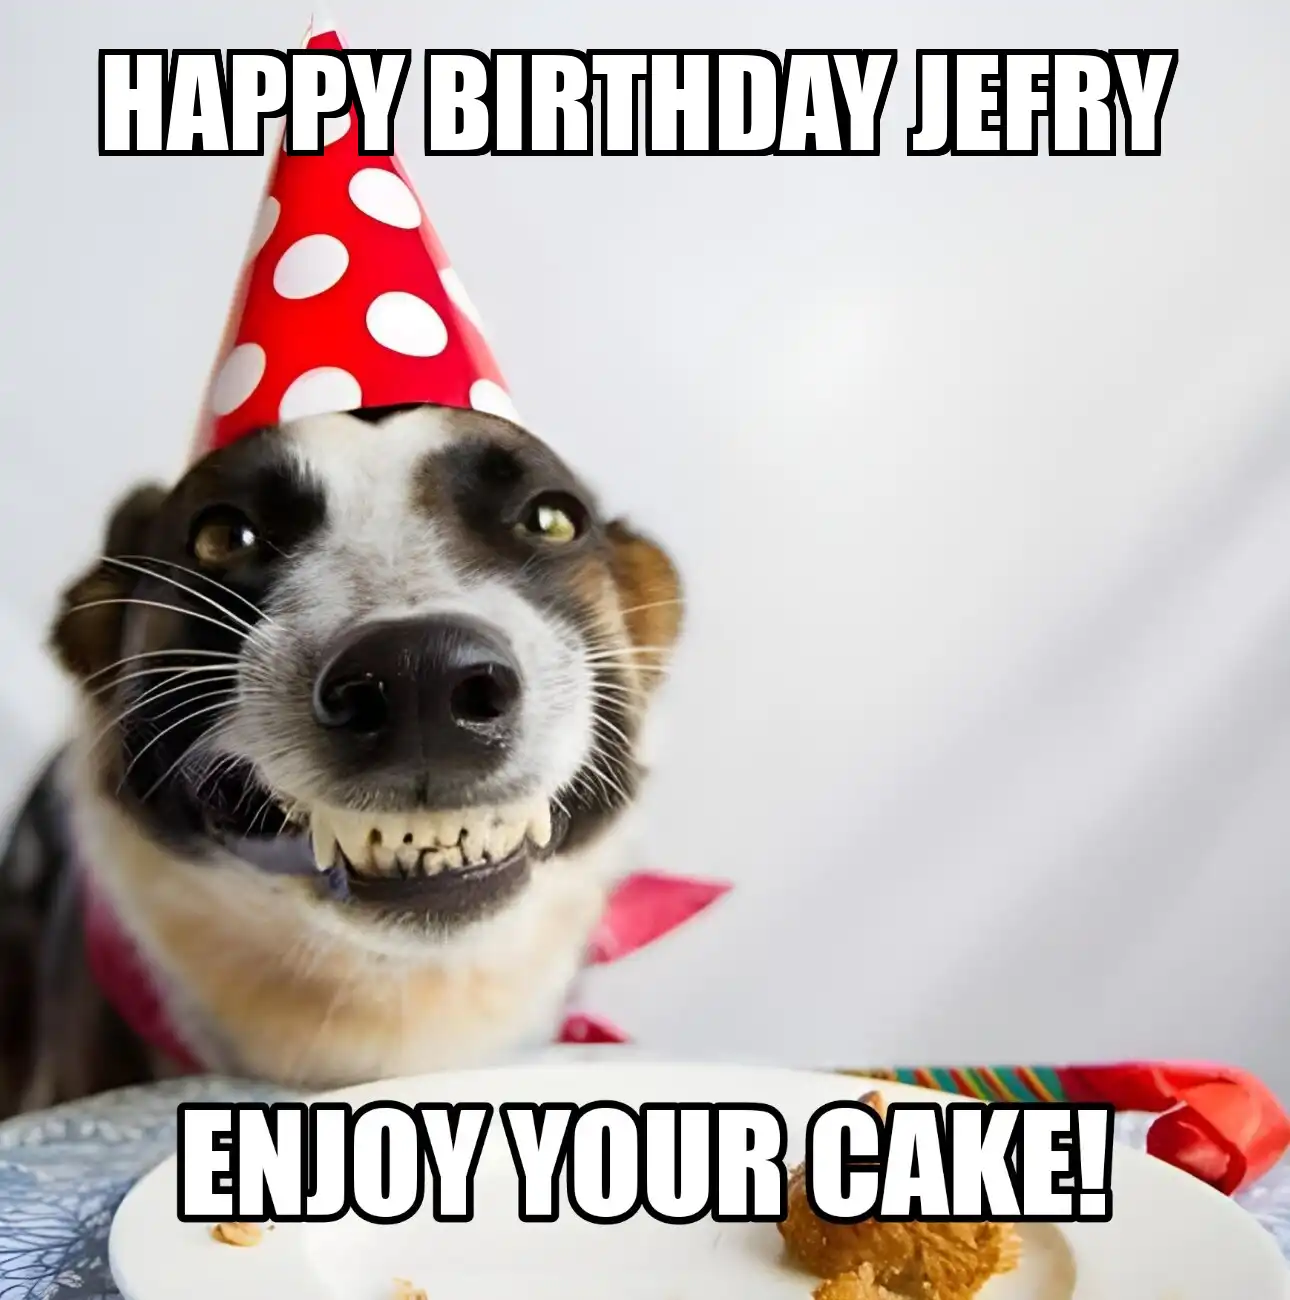 Happy Birthday Jefry Enjoy Your Cake Dog Meme